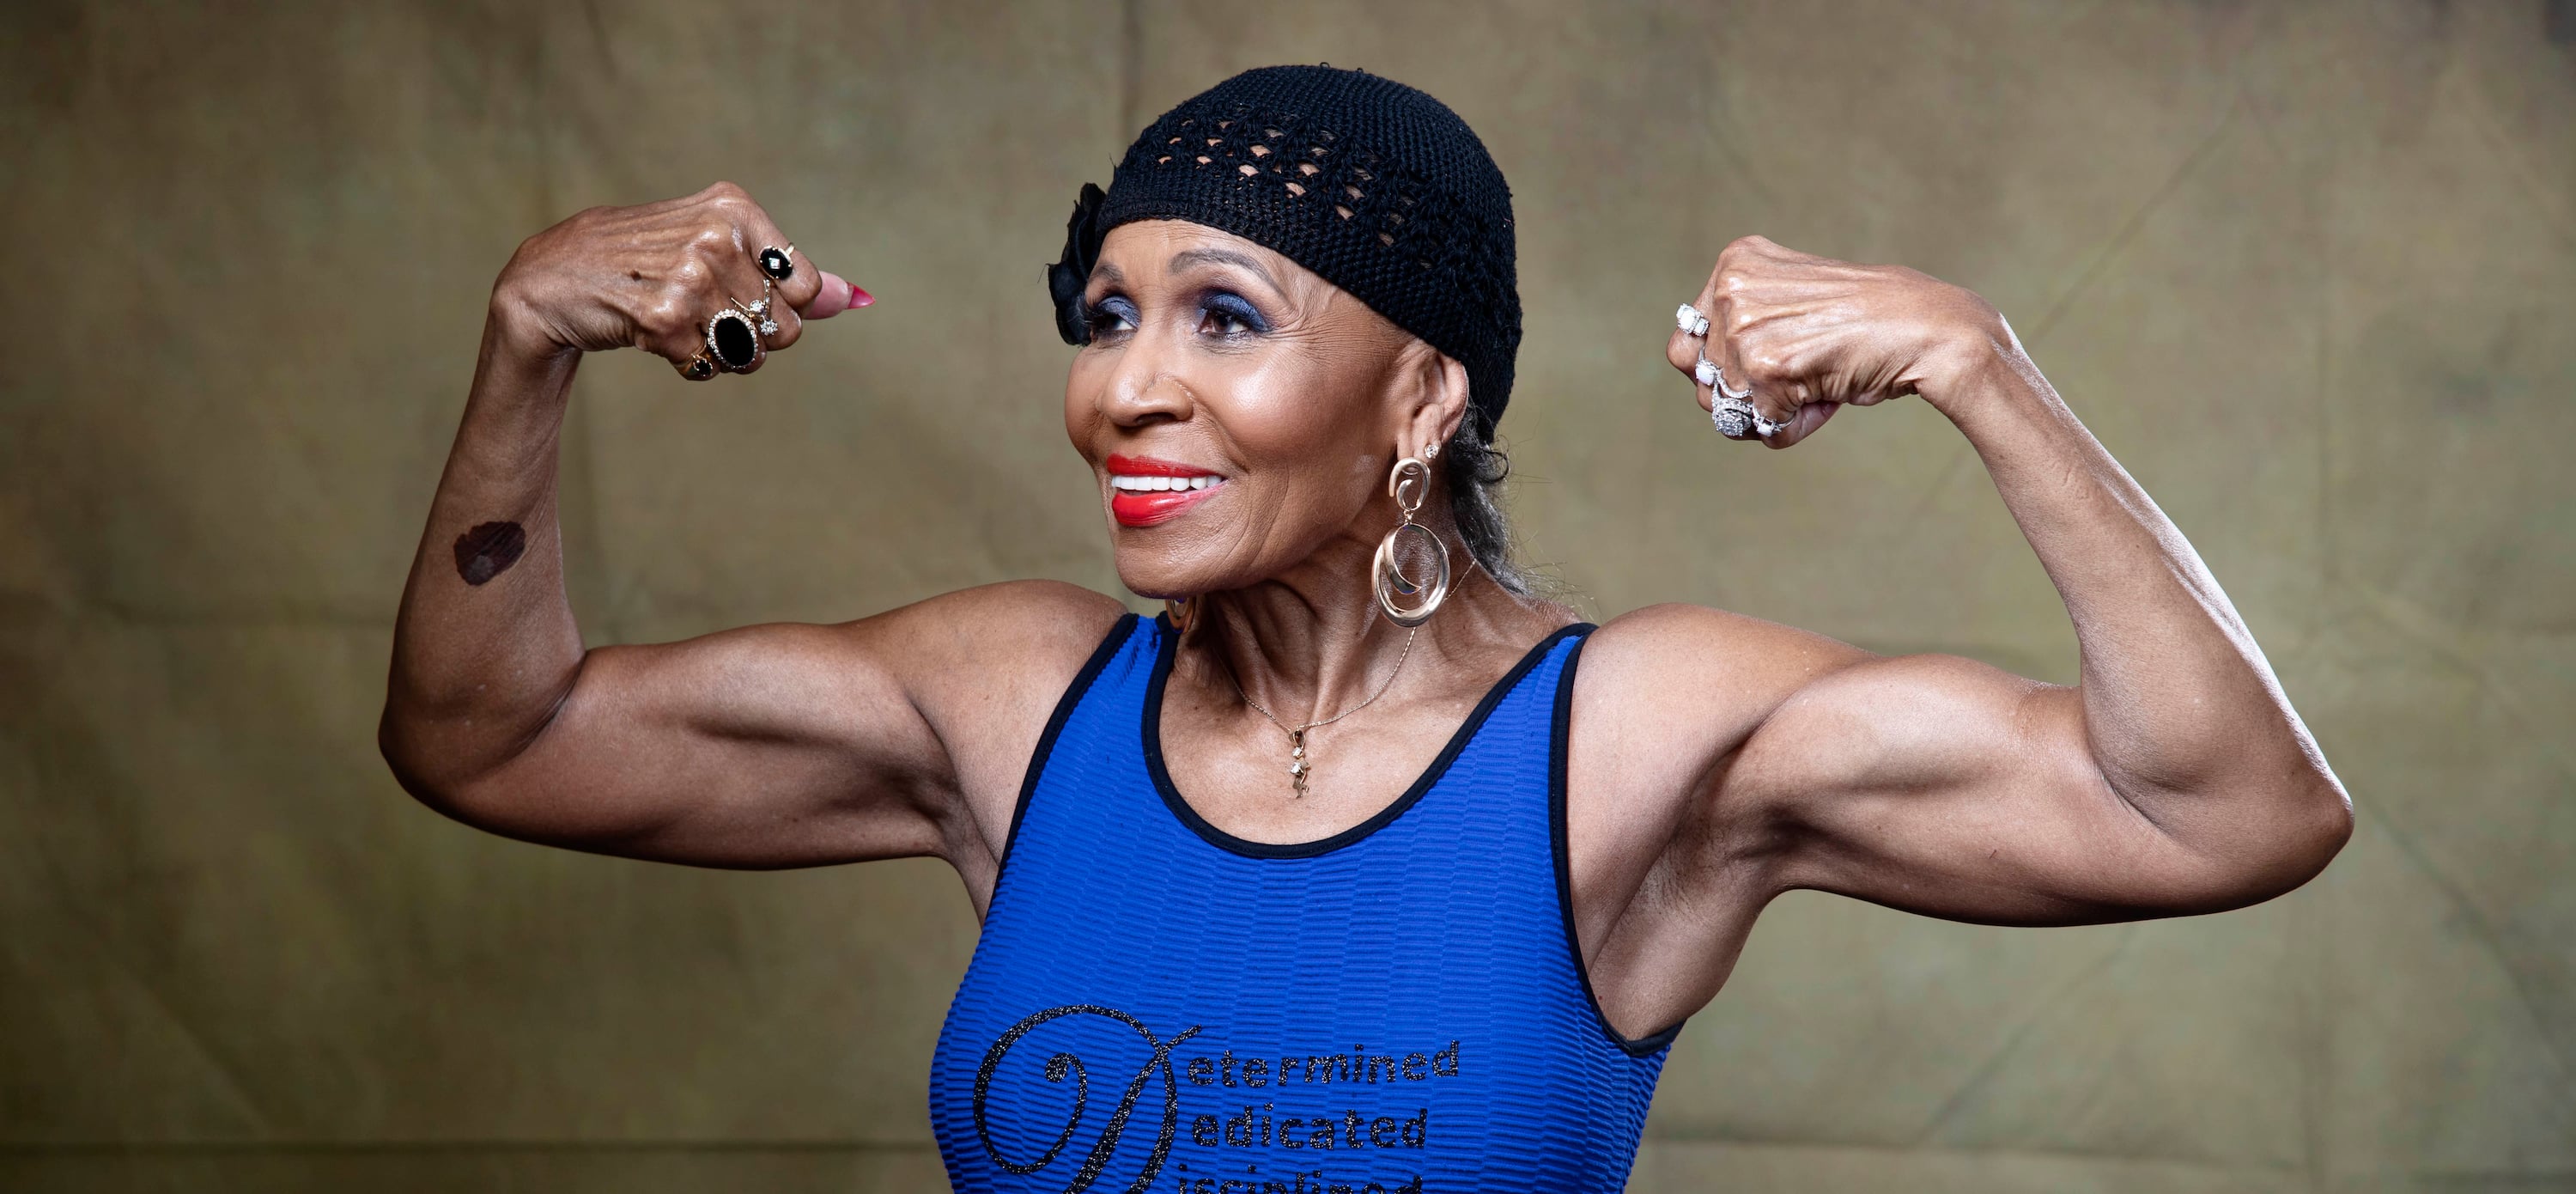 65 year old female bodybuilder